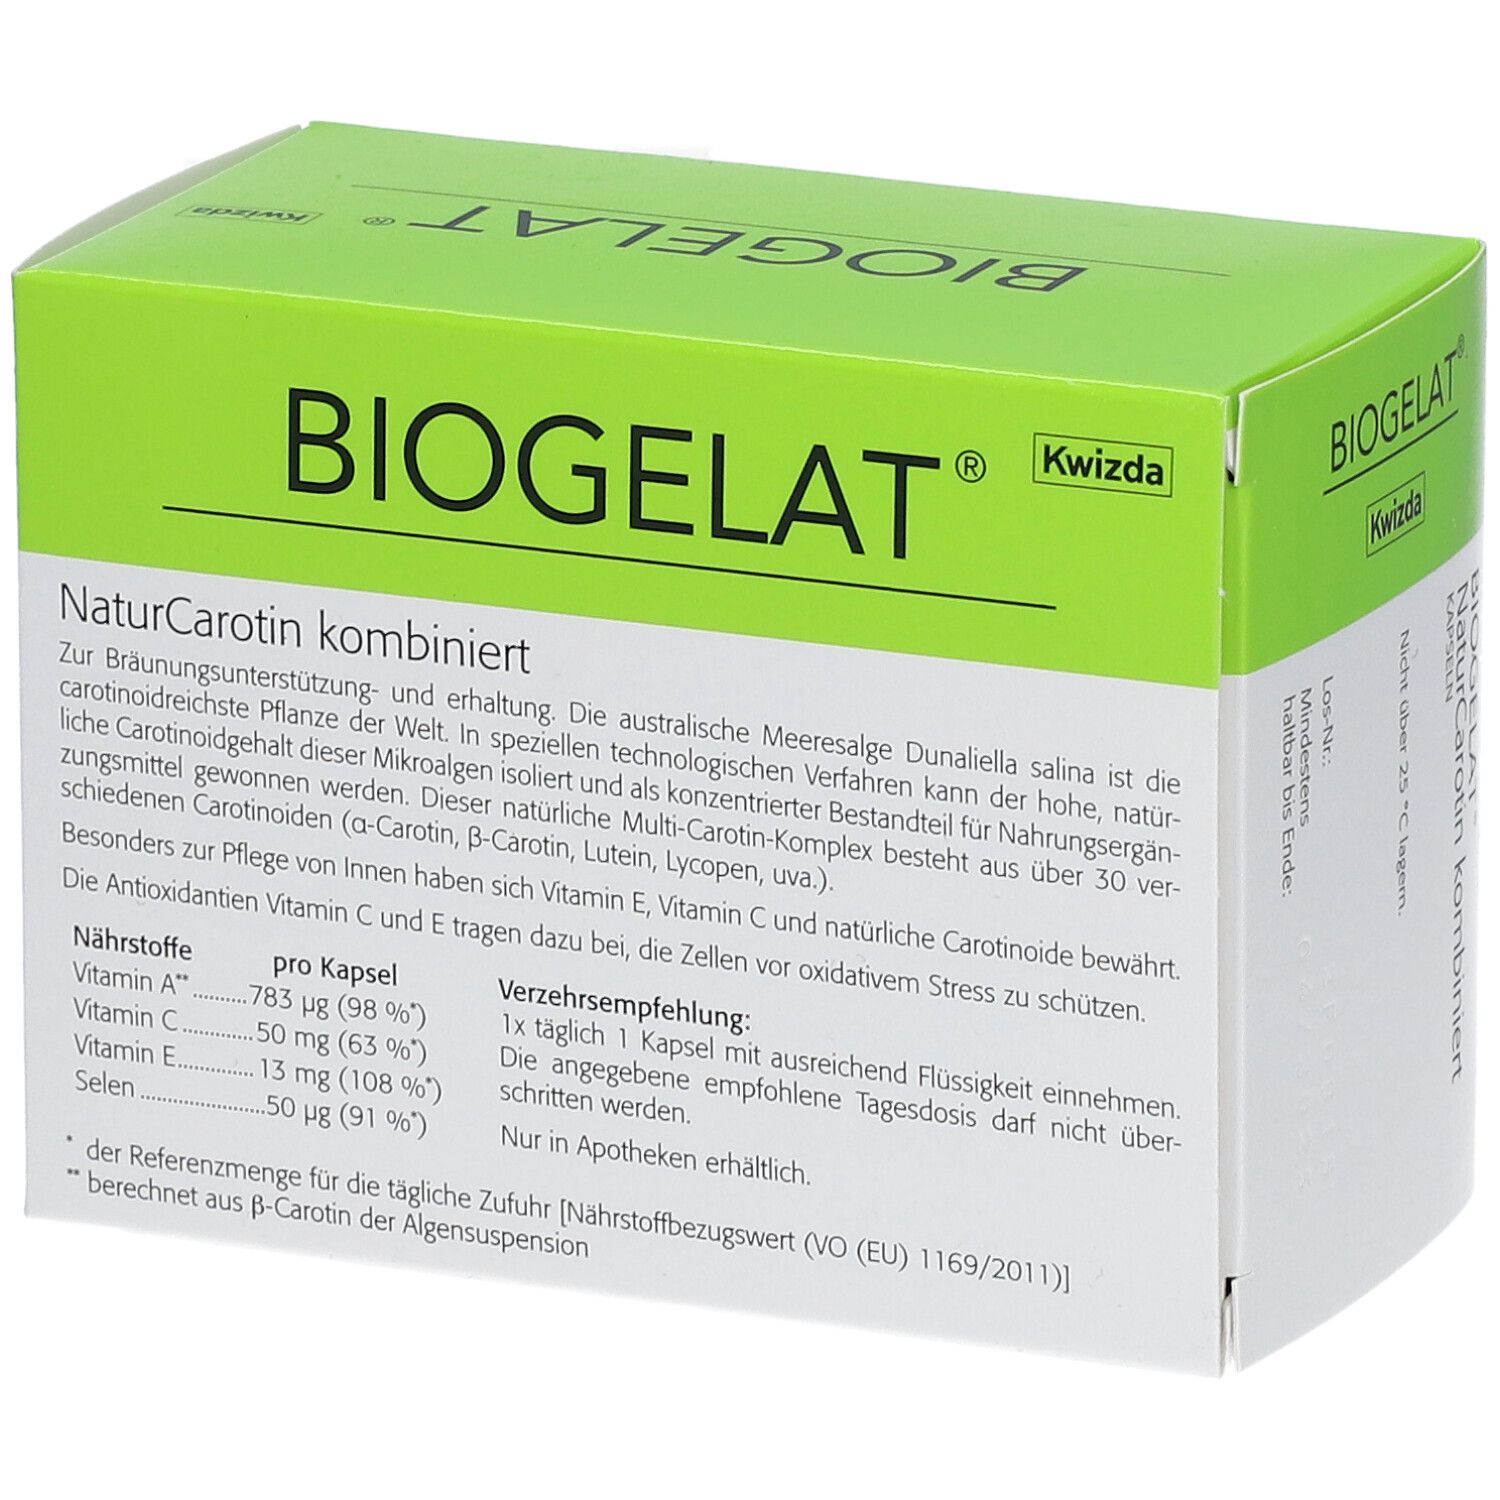 BIOGELAT® NaturCarotin